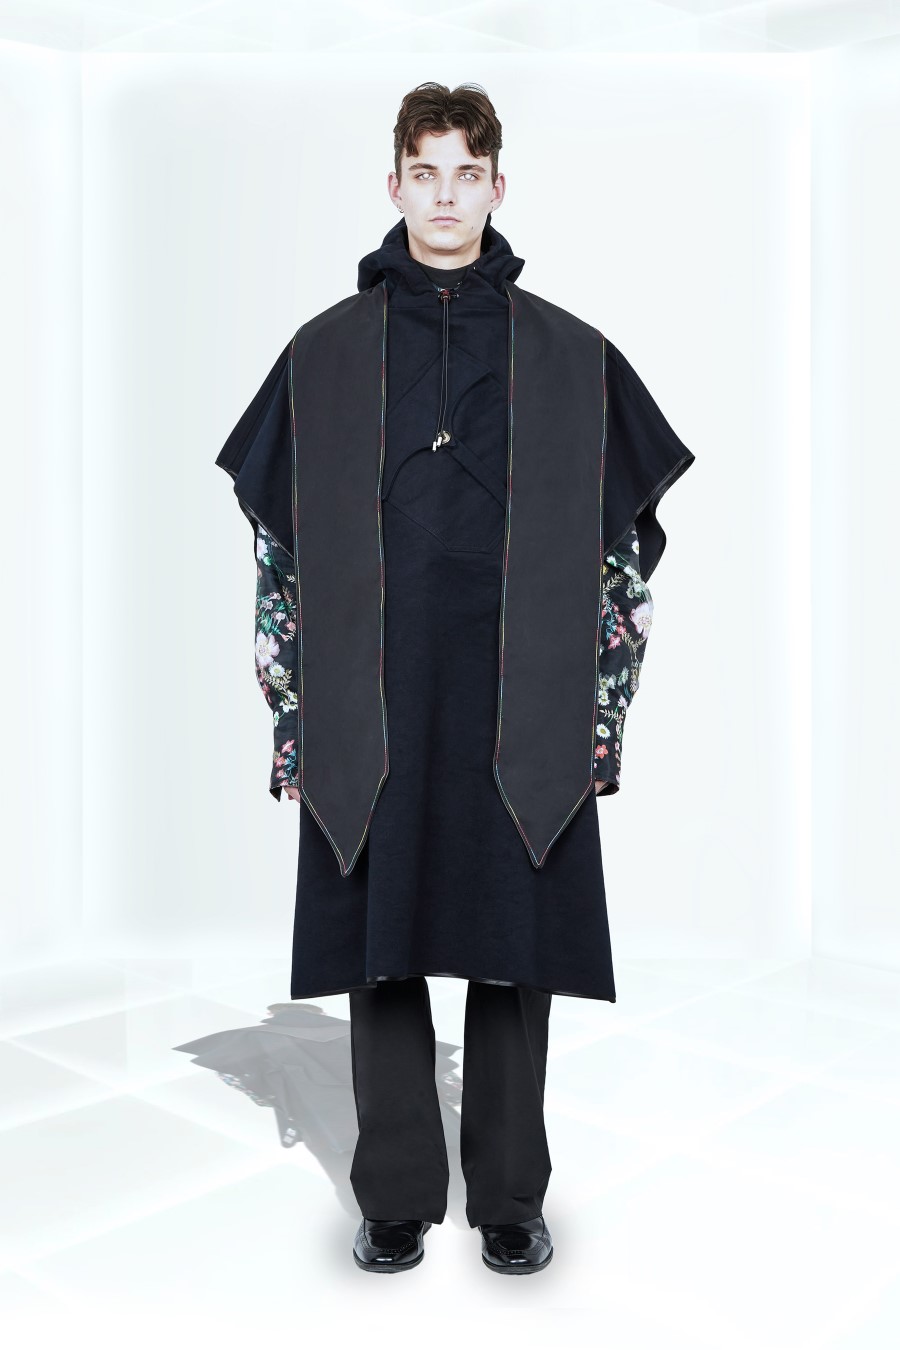 Boramy Viguier Fall Winter 2021 - Paris Fashion Week Men’s